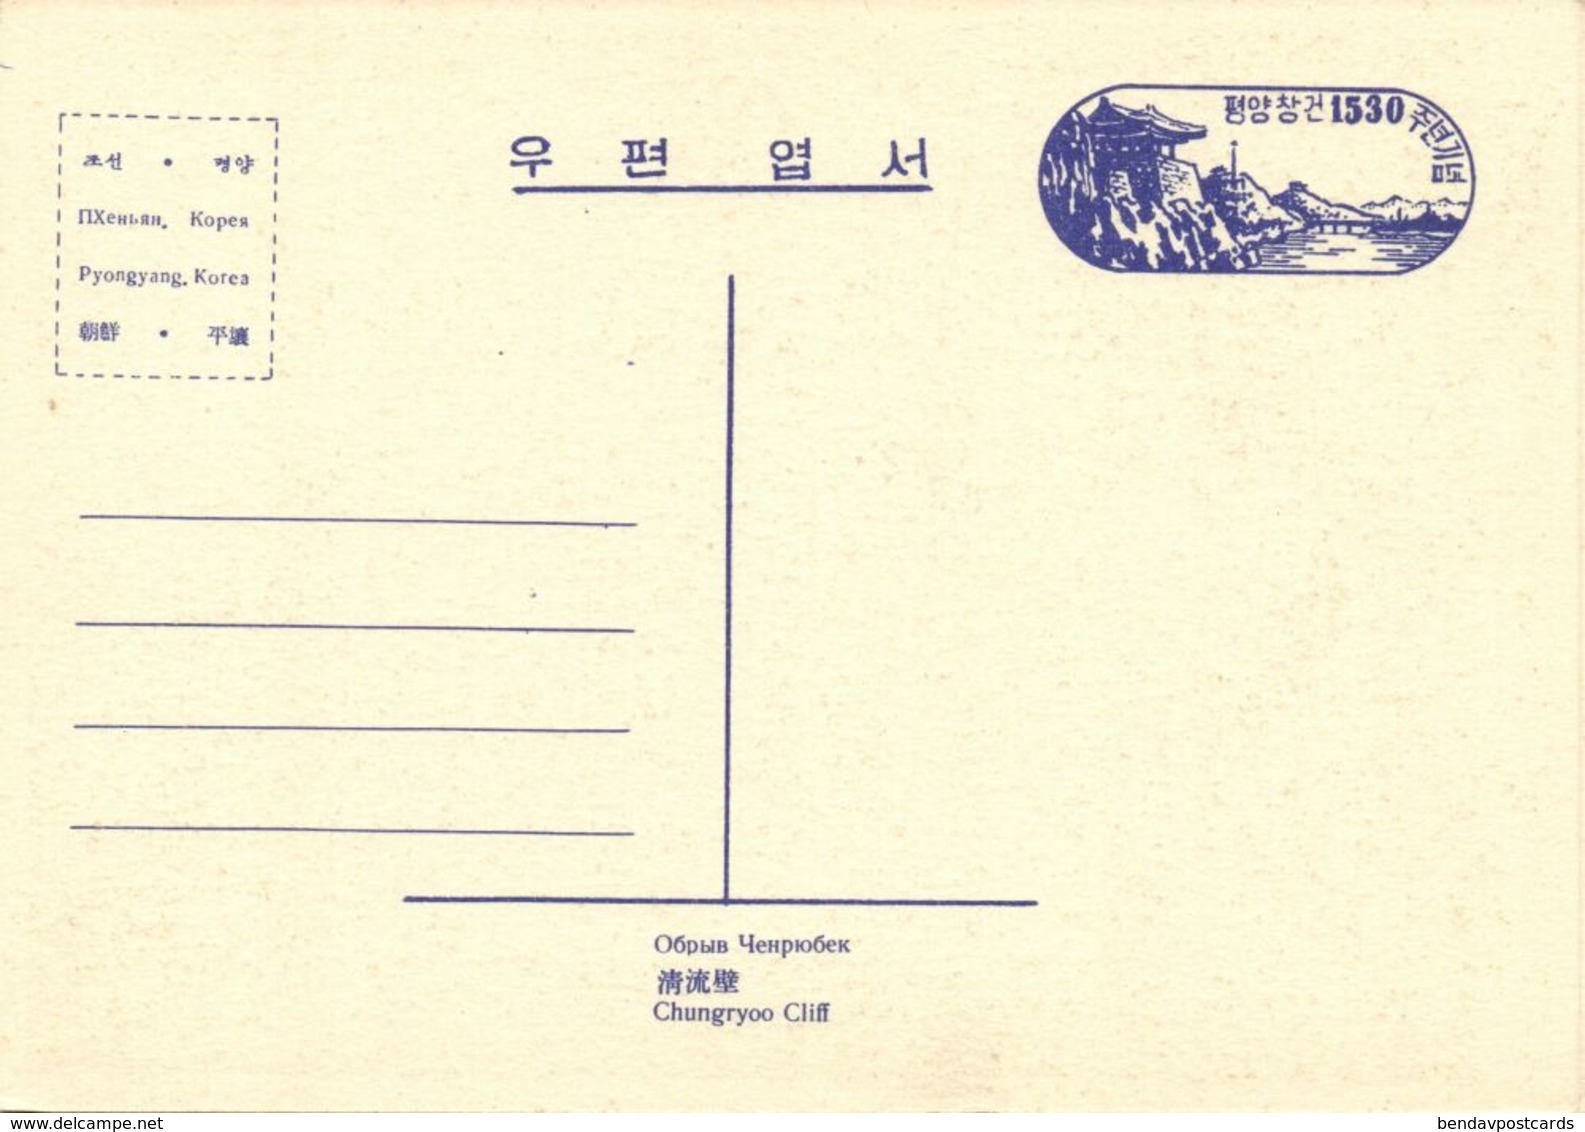 North Korea Coree, PYONGYANG, Chungryoo Cliff (1950s) Postcard - Korea, North